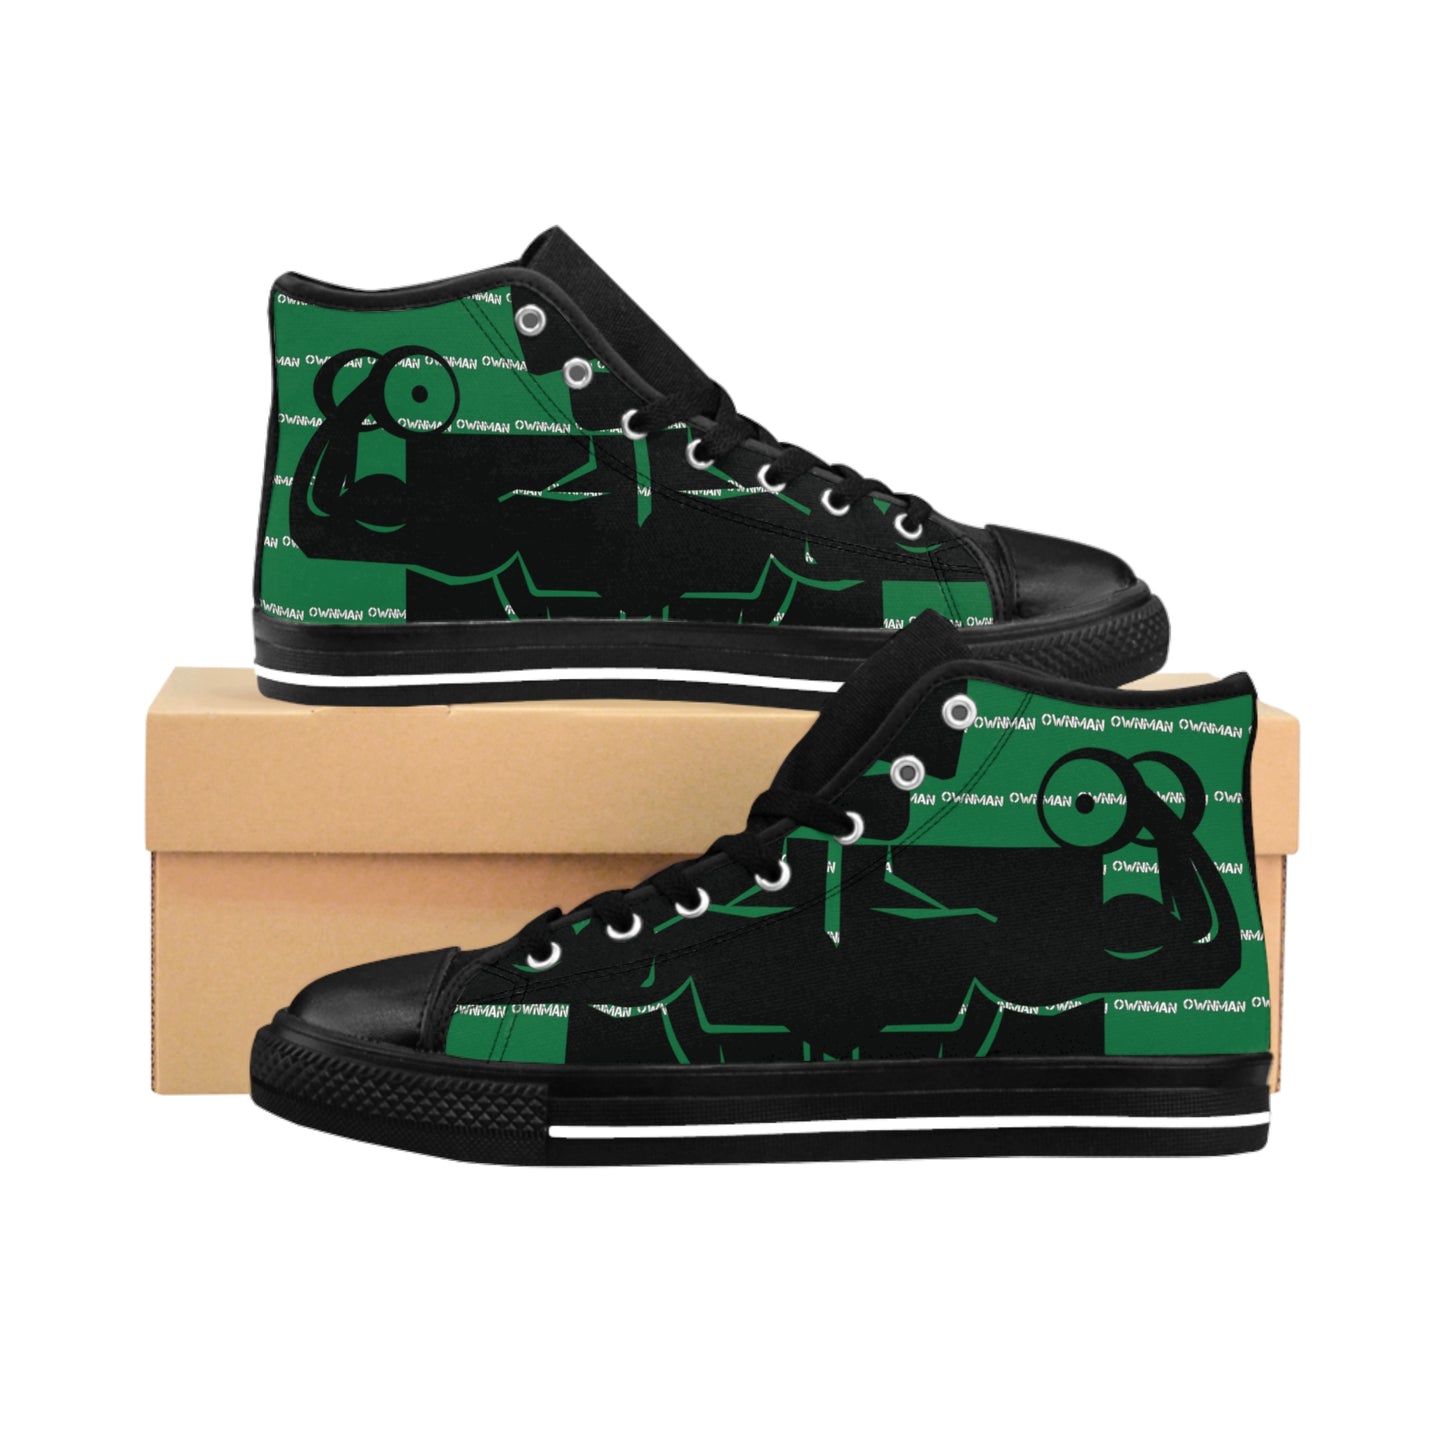 OWN MAN Men's Classic Sneakers Green